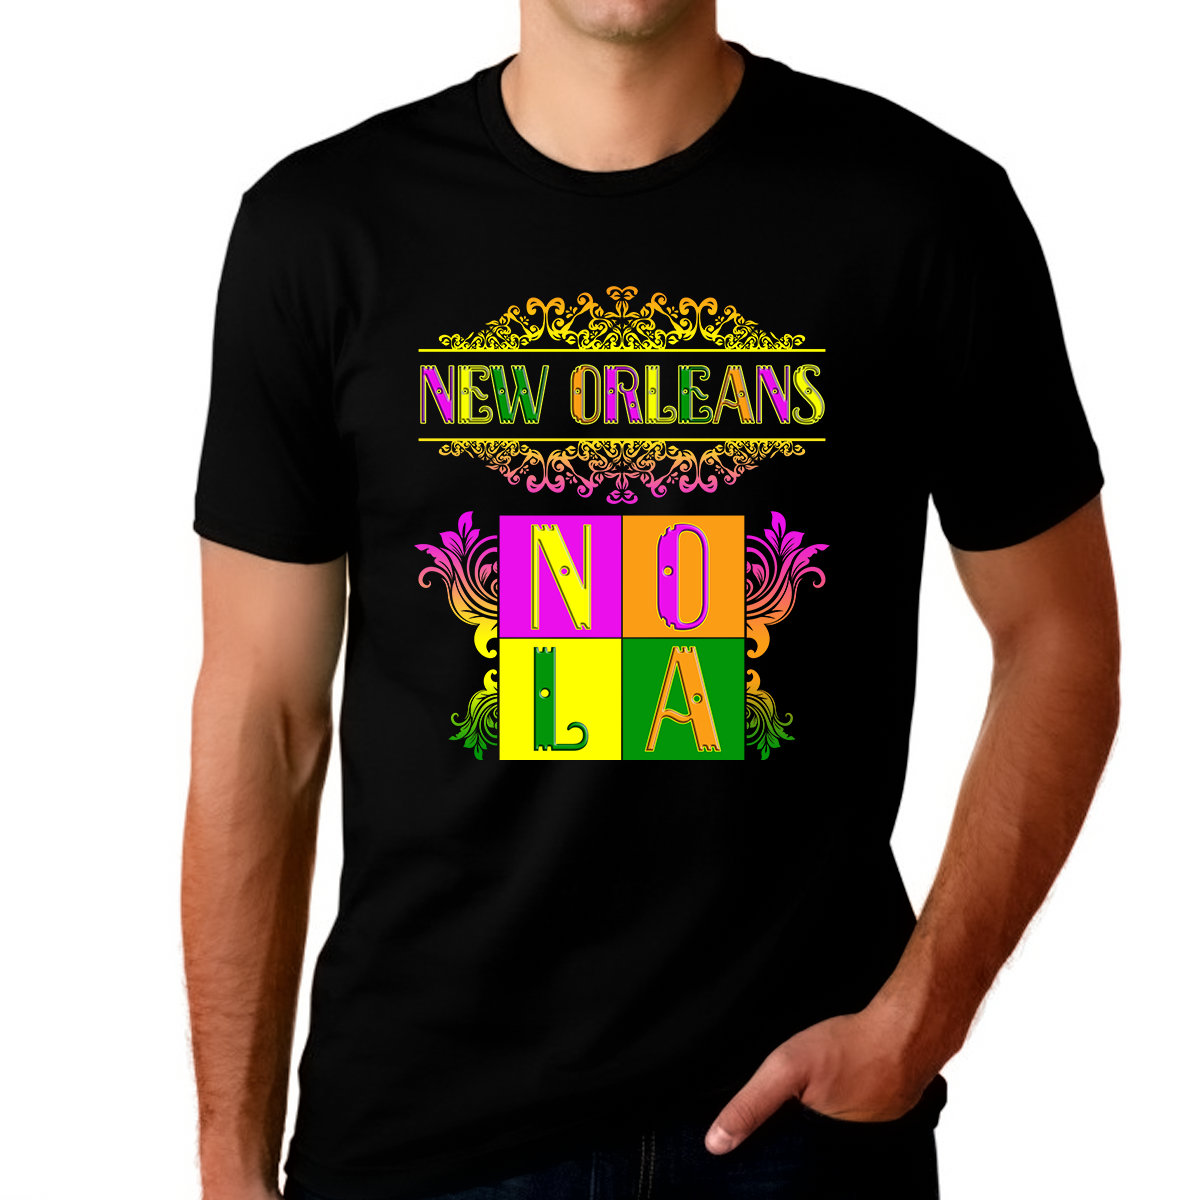 Mardi Gras Shirts for Men New Orleans NOLA Shirt Mardi Grass Mardi Gras Shirt Mardi Gras Outfit